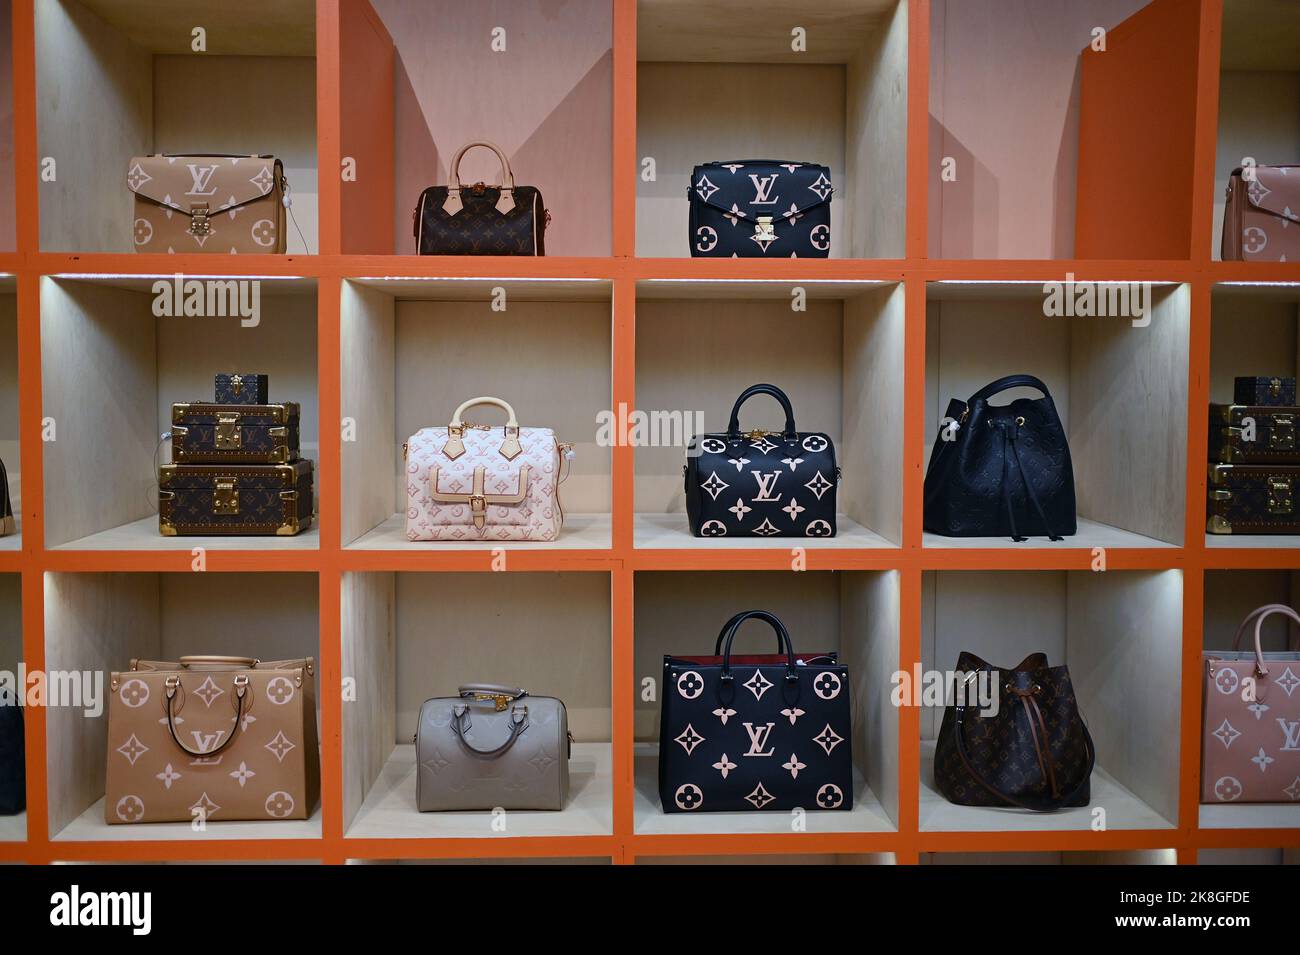 Louis Vuitton Canvas Tote Bag - Authentic 200 Trunks Exhibition Collectible